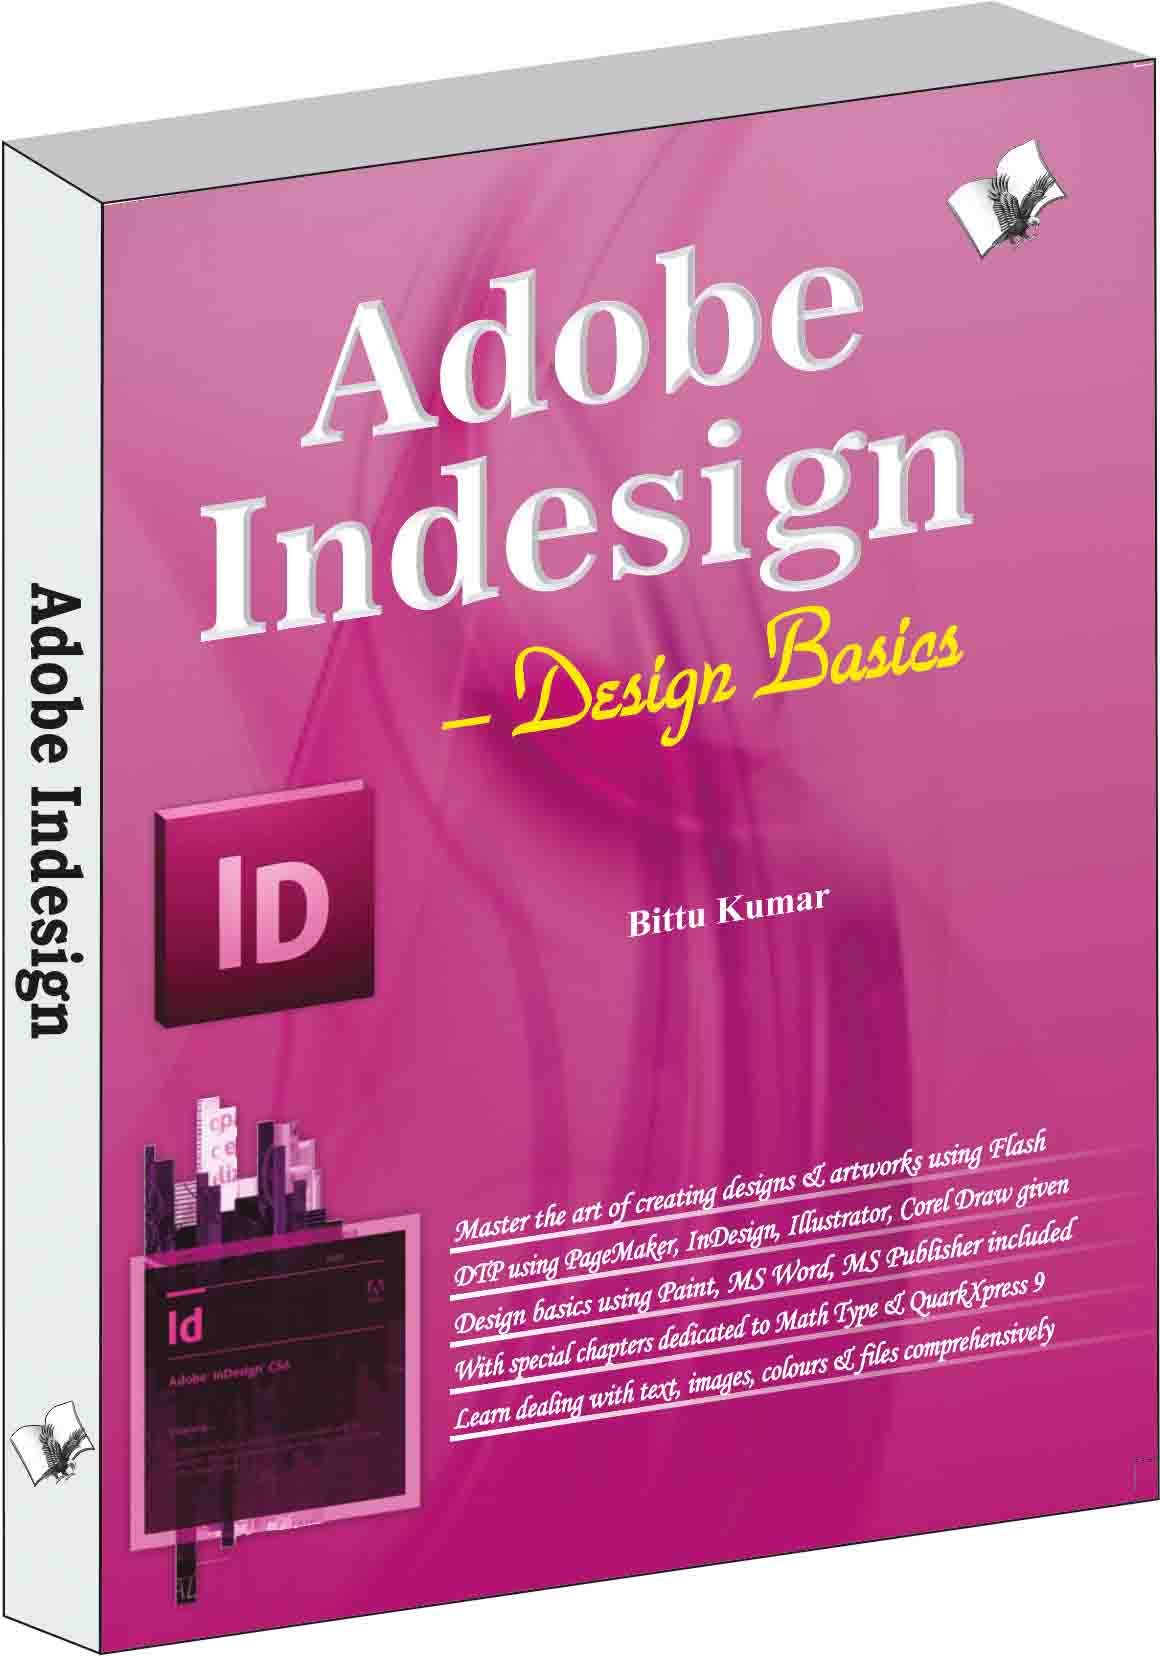 Adobe Indesign -Design Basics